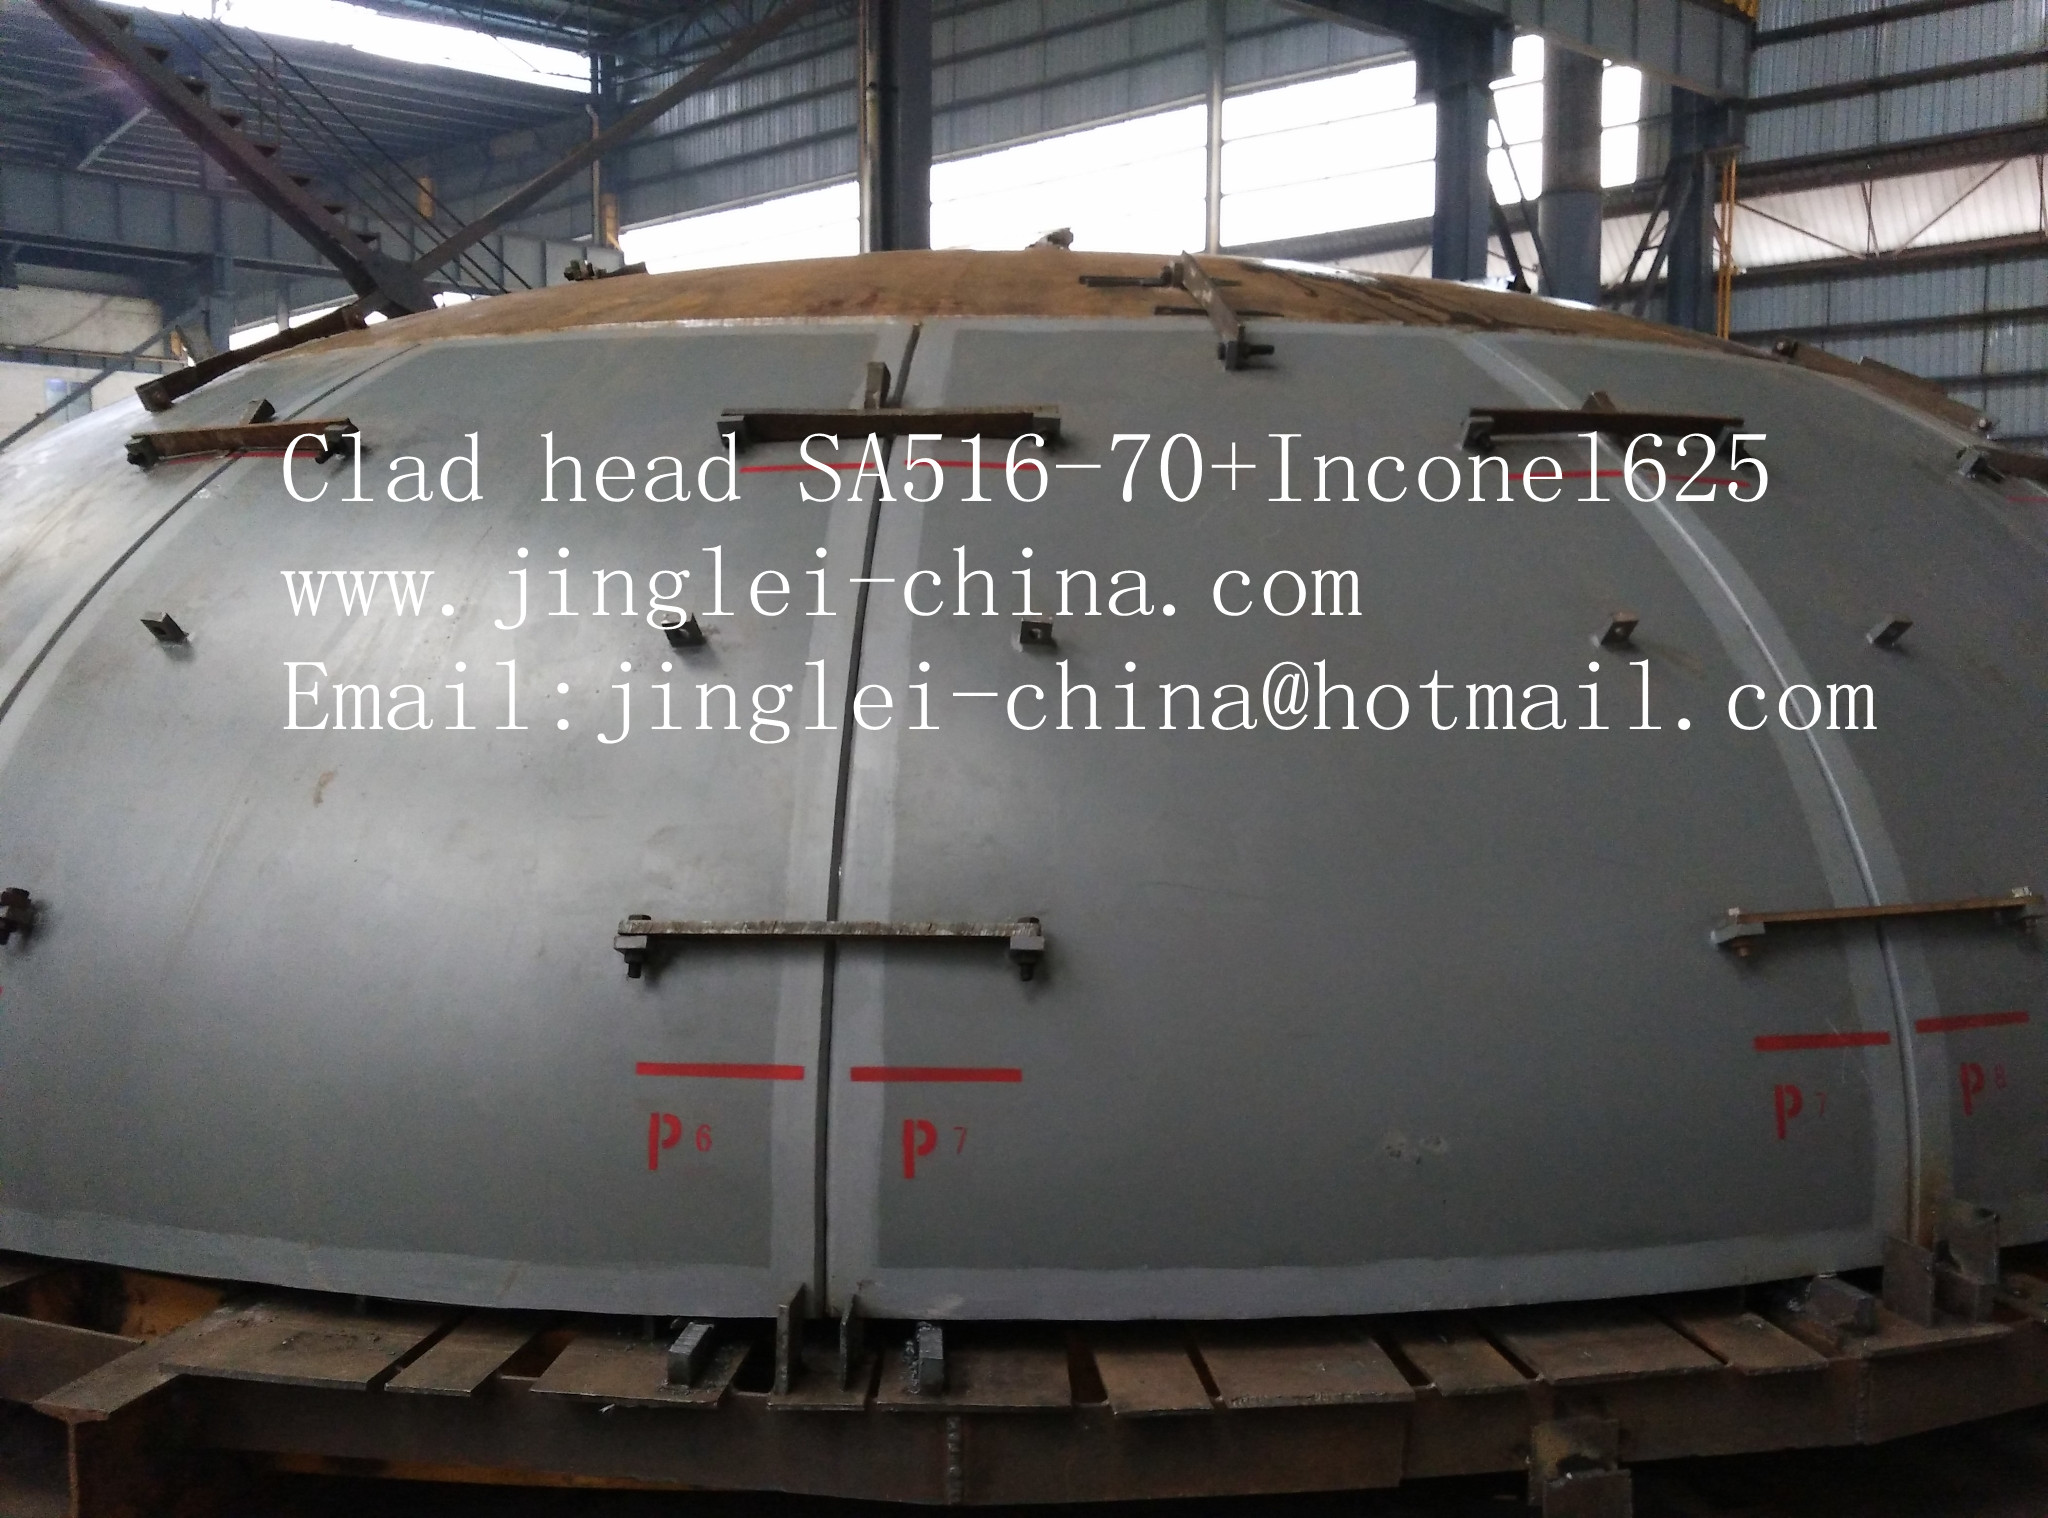 Clad head SA516-70+Inconel625